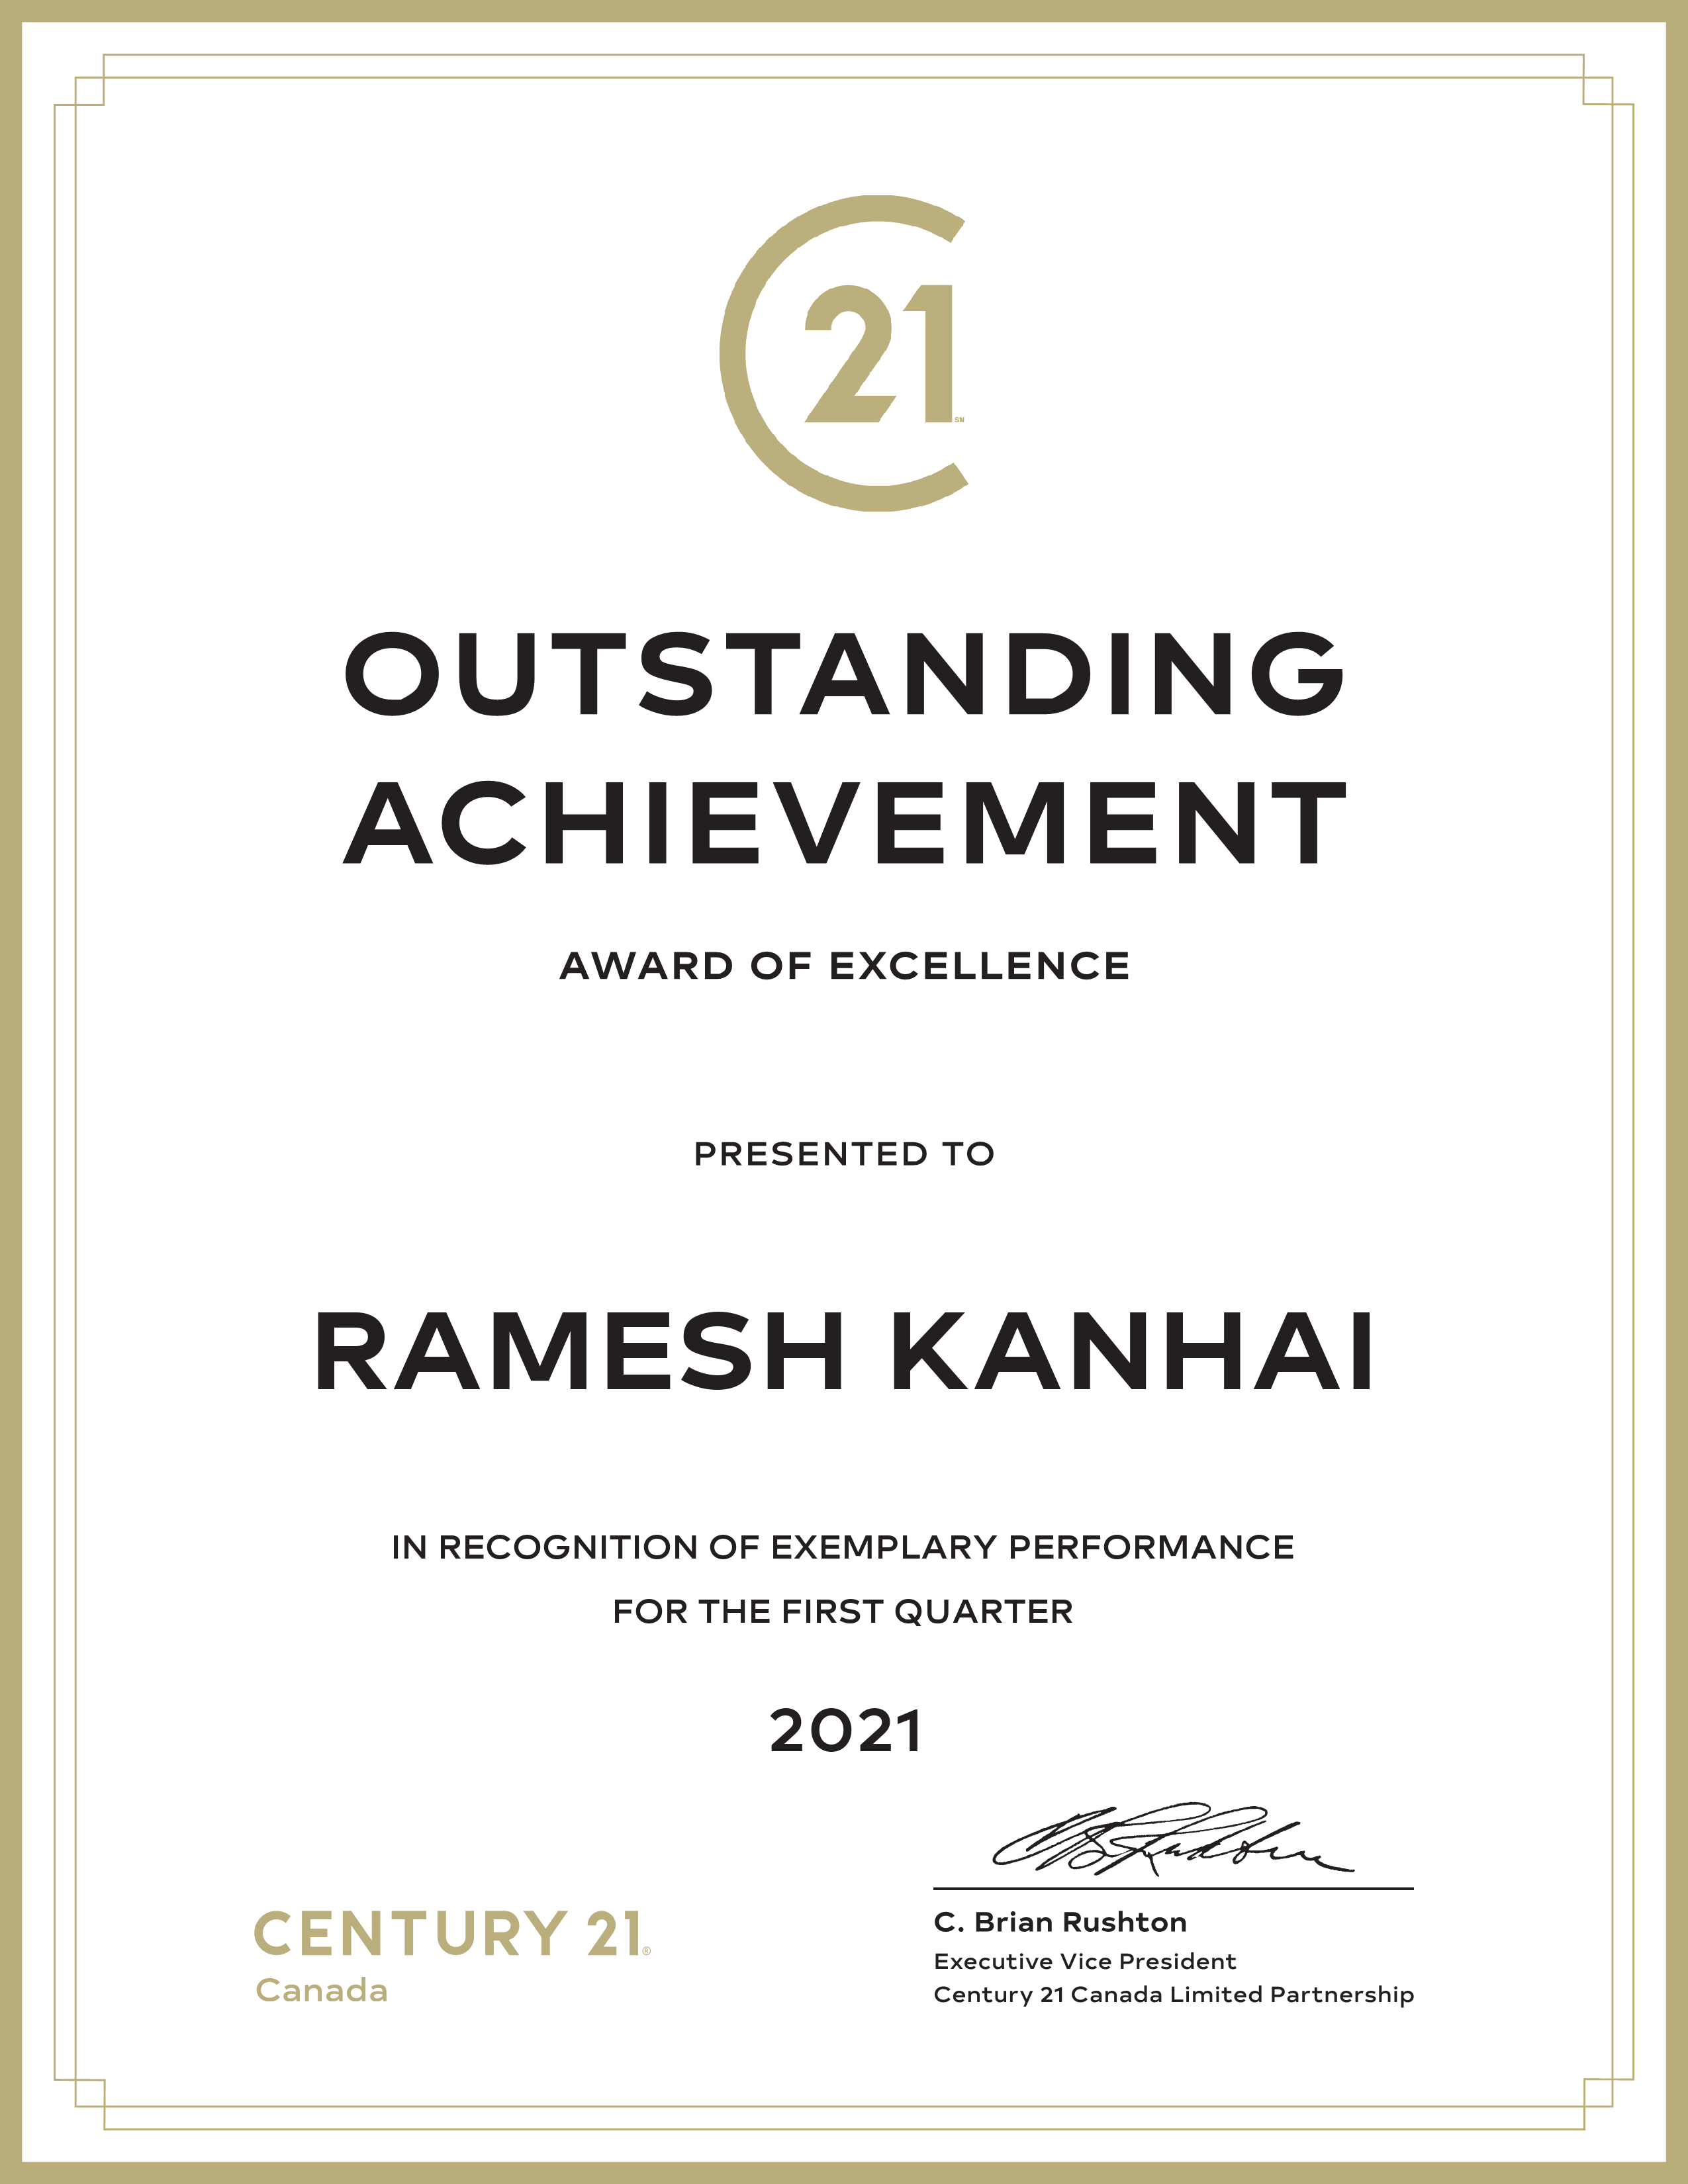 Ramesh Kanhai Award